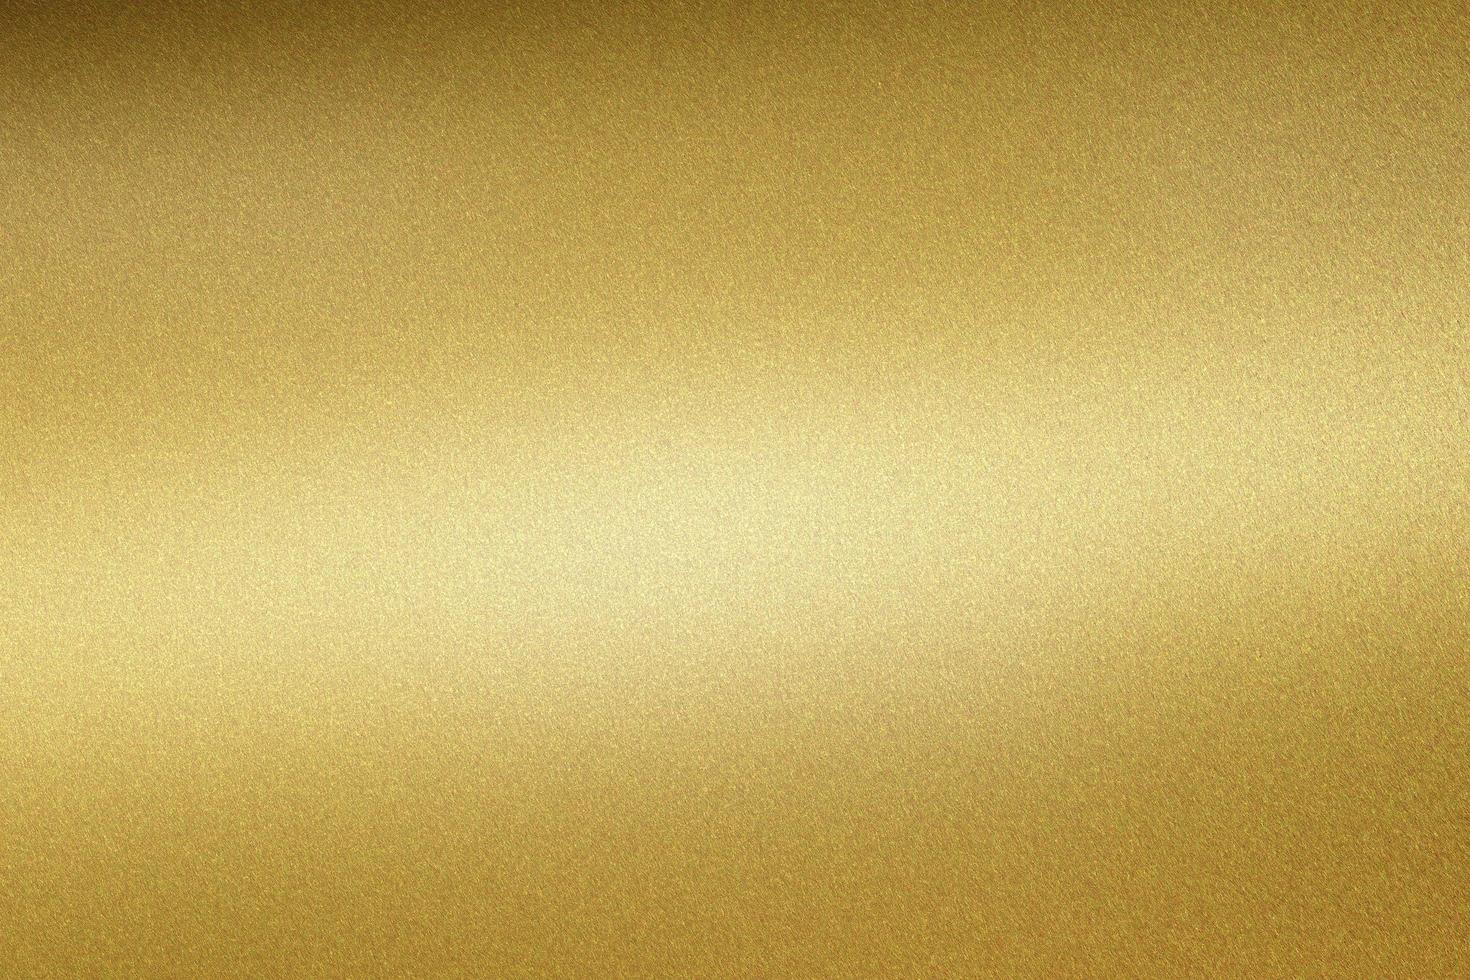 gloeiende gouden stalen buis oppervlak, abstracte textuur achtergrond foto